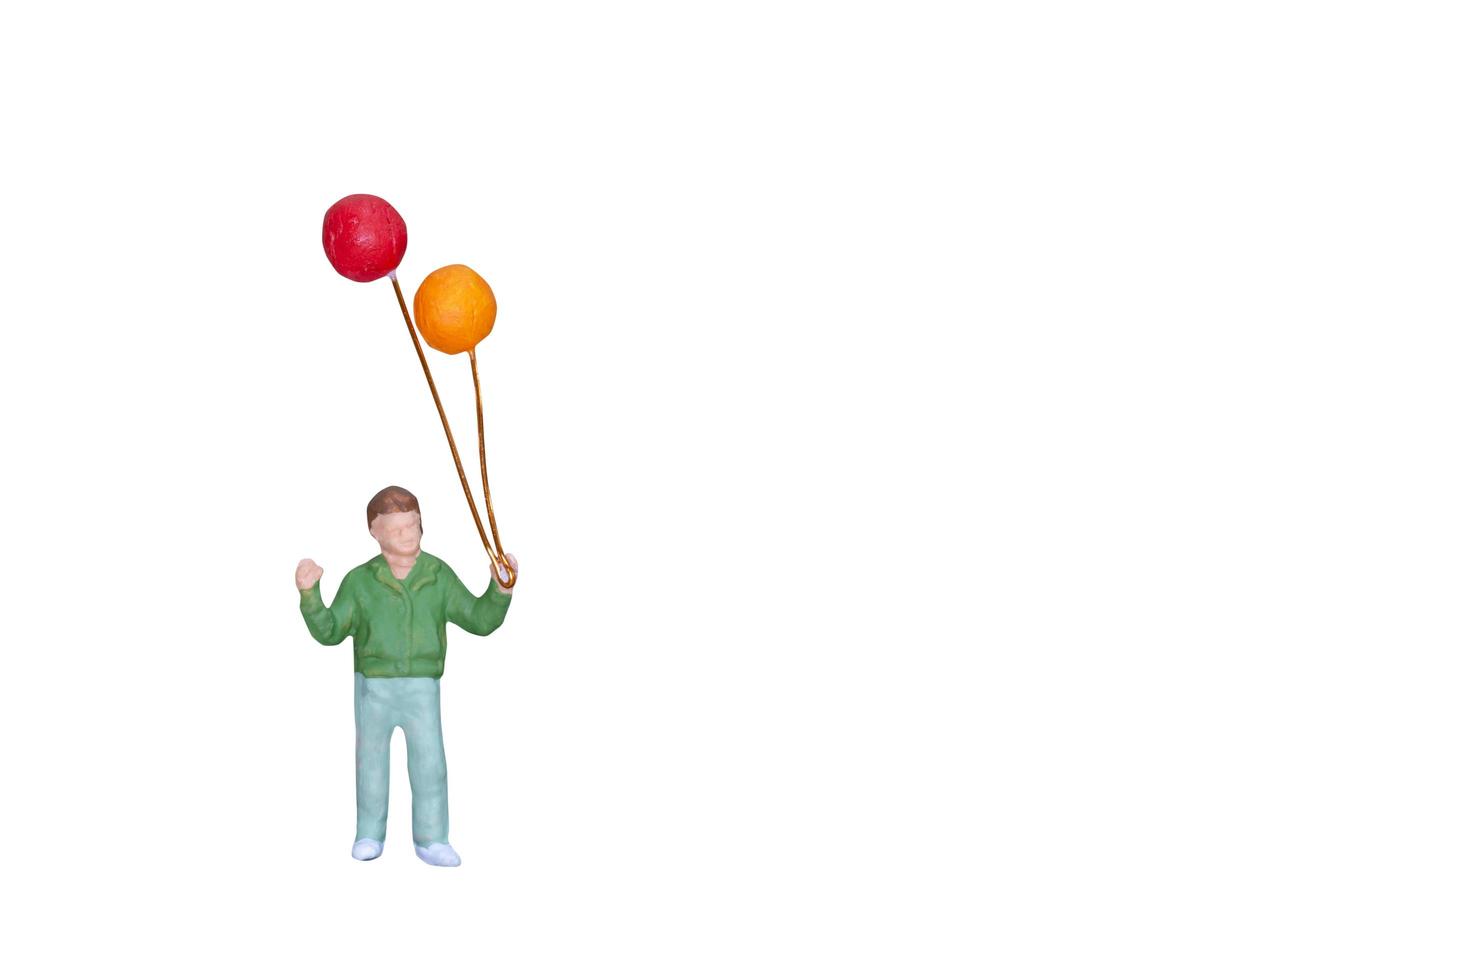 miniatyr person som håller ballonger isolerad på en vit bakgrund foto